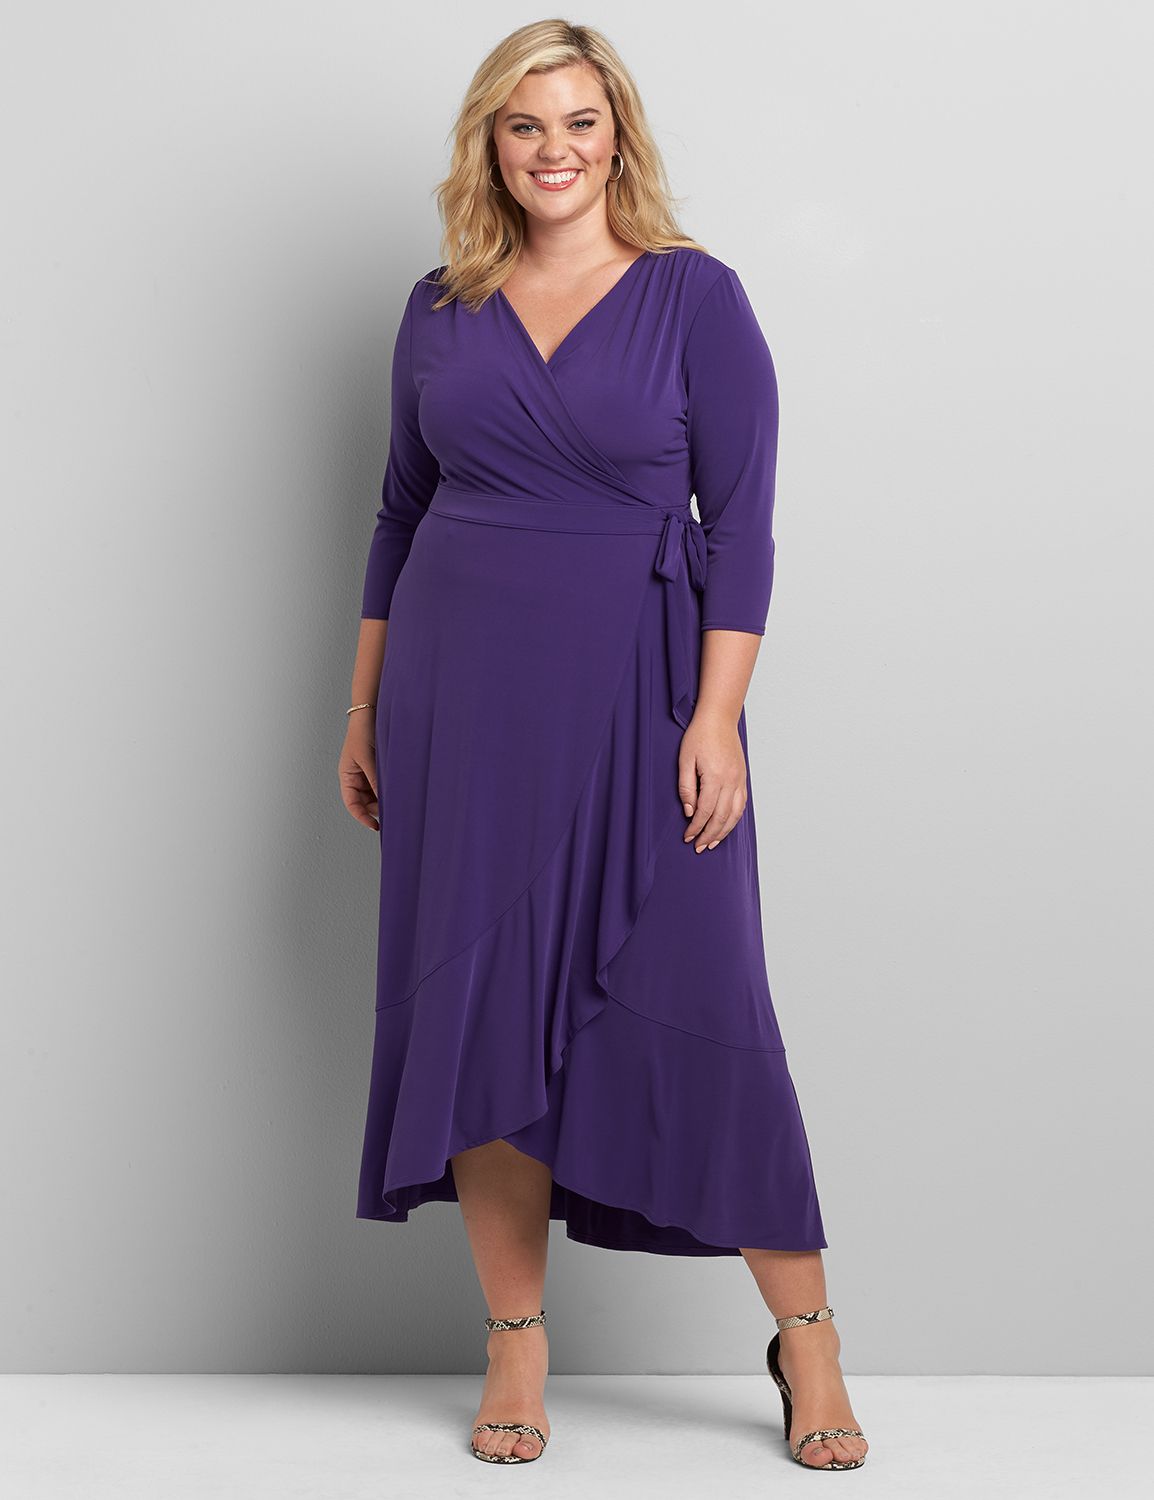 lane bryant purple dress